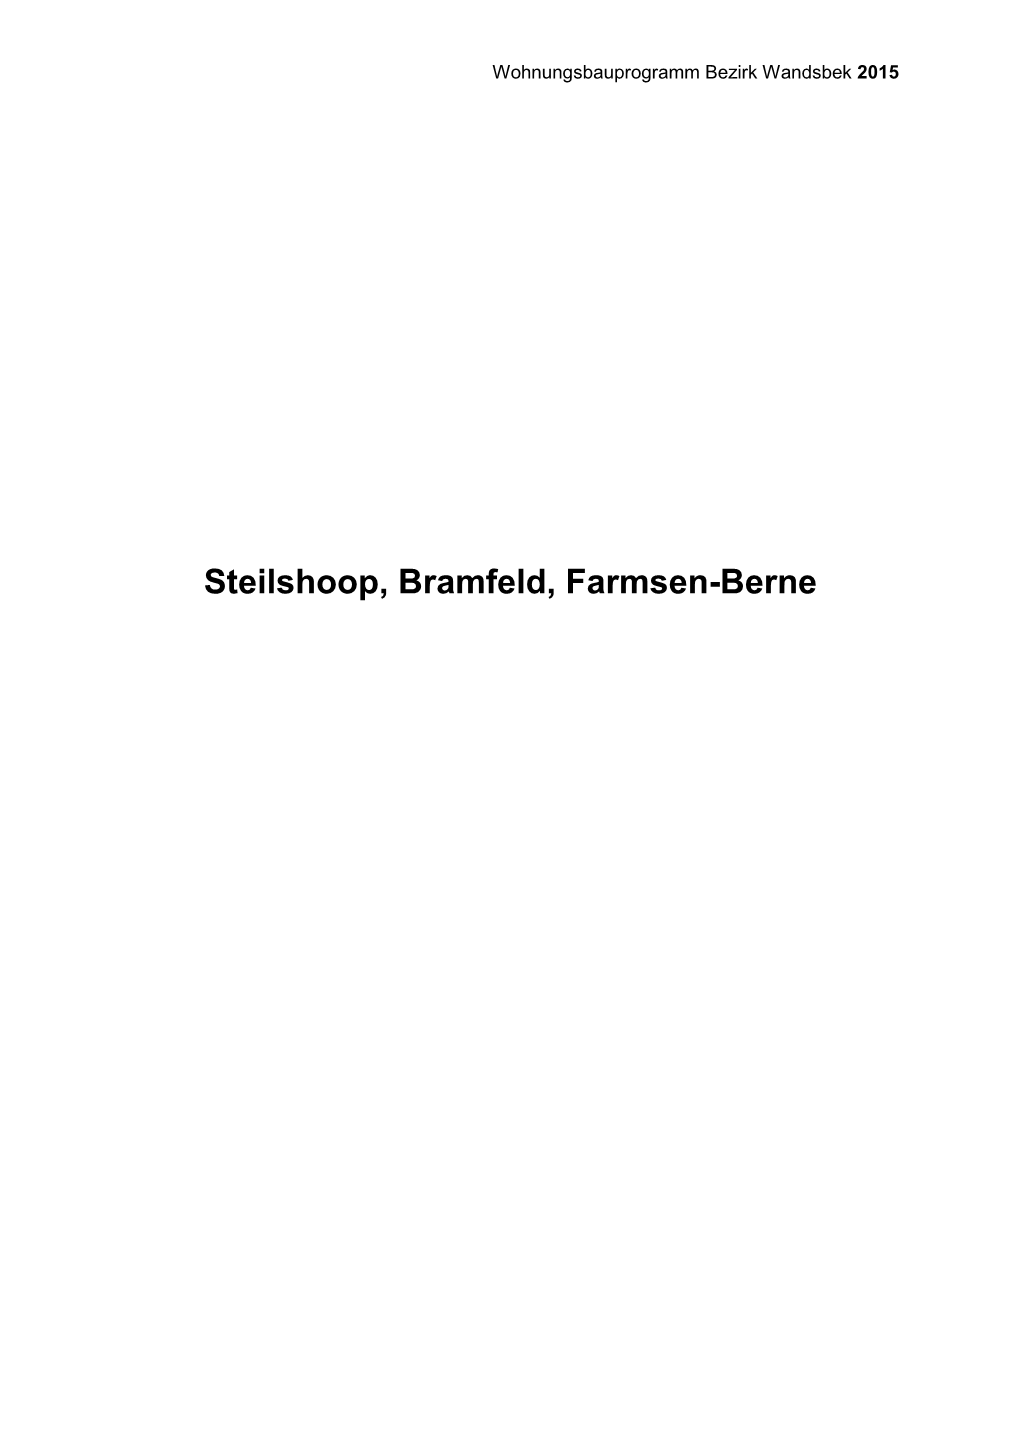 Steilshoop, Bramfeld, Farmsen-Berne